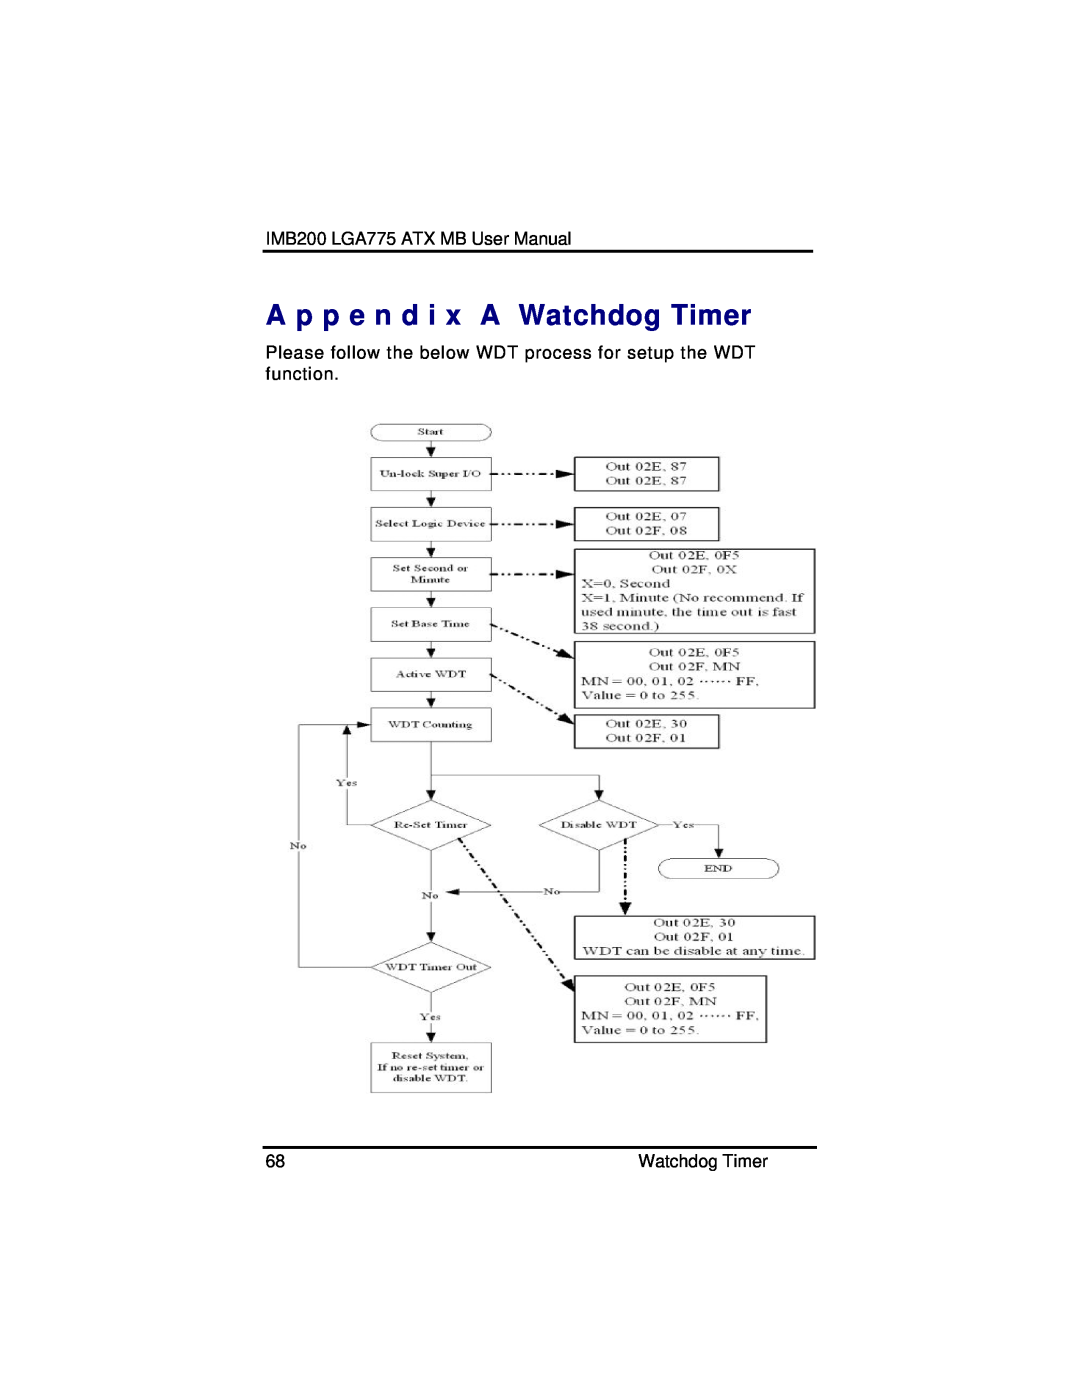 Intel IMB200VGE user manual A p p e n d i x A Watchdog Timer, IMB200 LGA775 ATX MB User Manual 